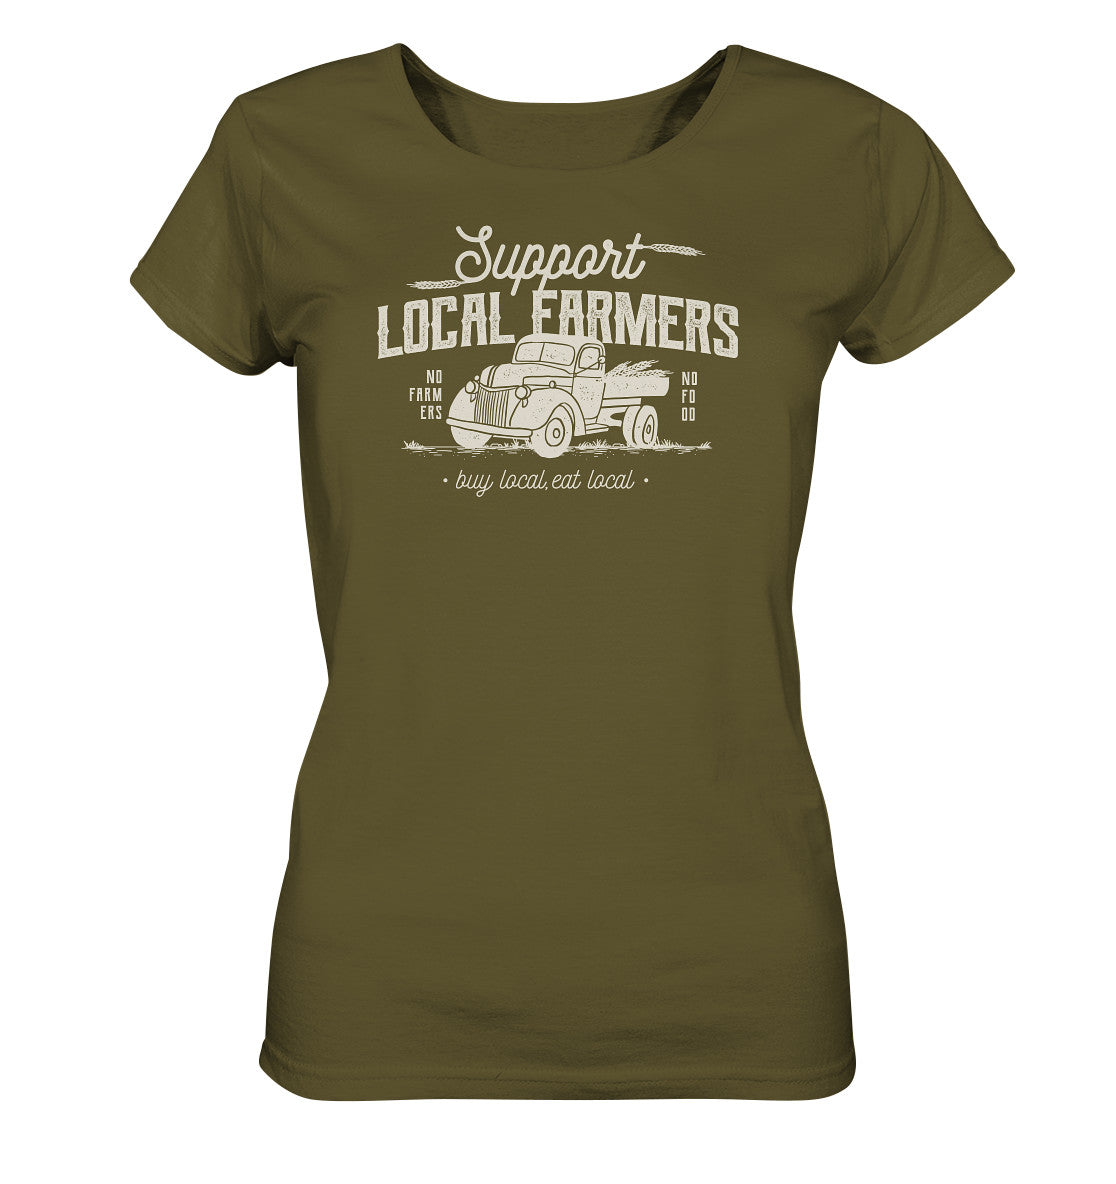 Support local Farmers. Retro Shirt Landwirt. No Farmers no food. Dorfkram® khaki